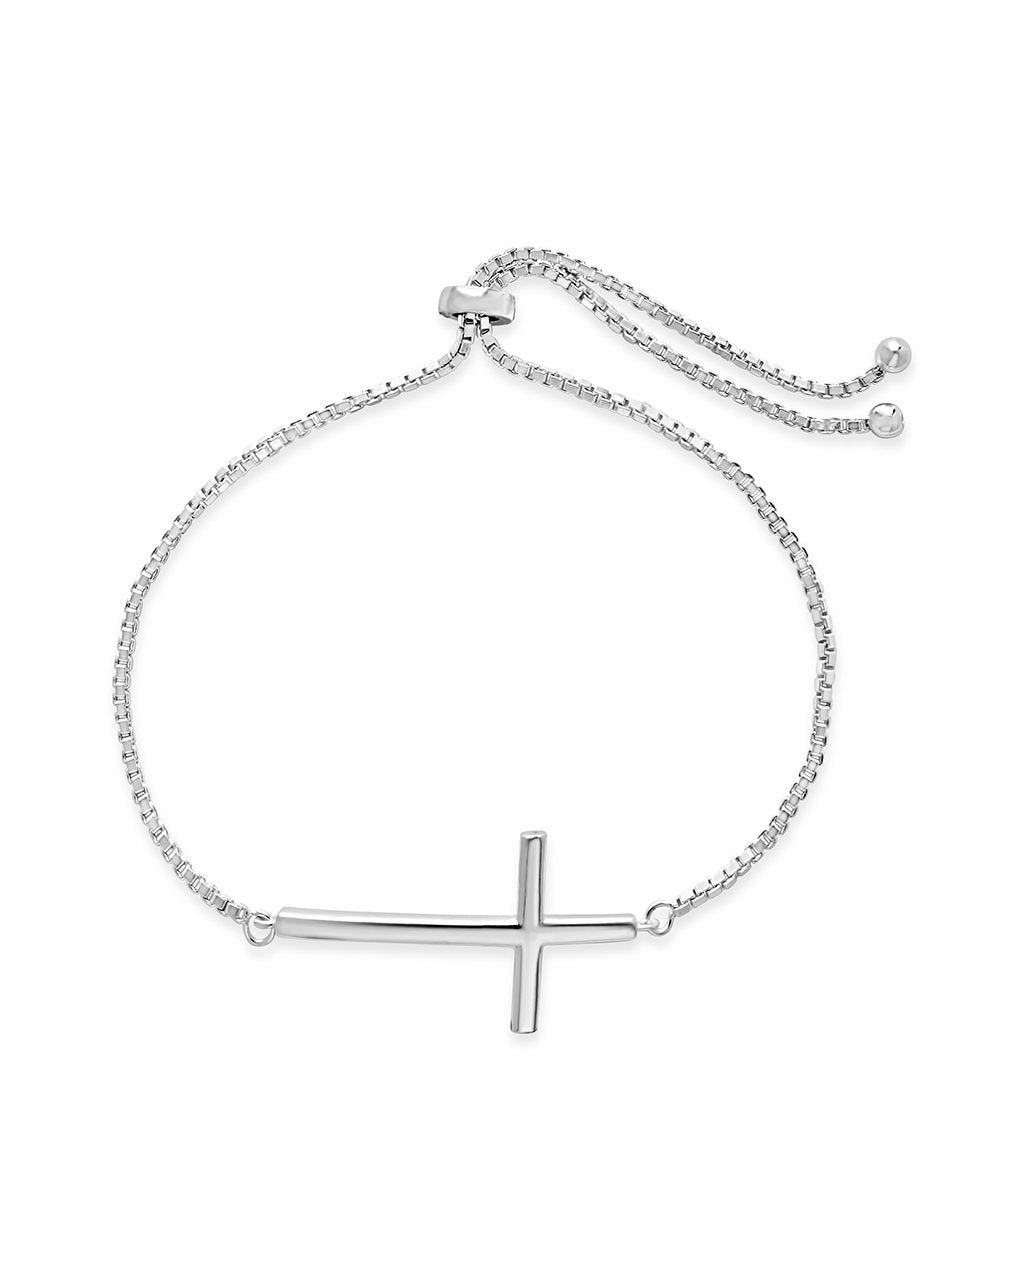 Leather Bracelet, Cross Bracelet, Mens Bracelets Leather, Christian  Jewelry, Cross, Religious Gift, Mens Bracelet, Womens Bracelet, Faith |  Urban Survival Gear USA